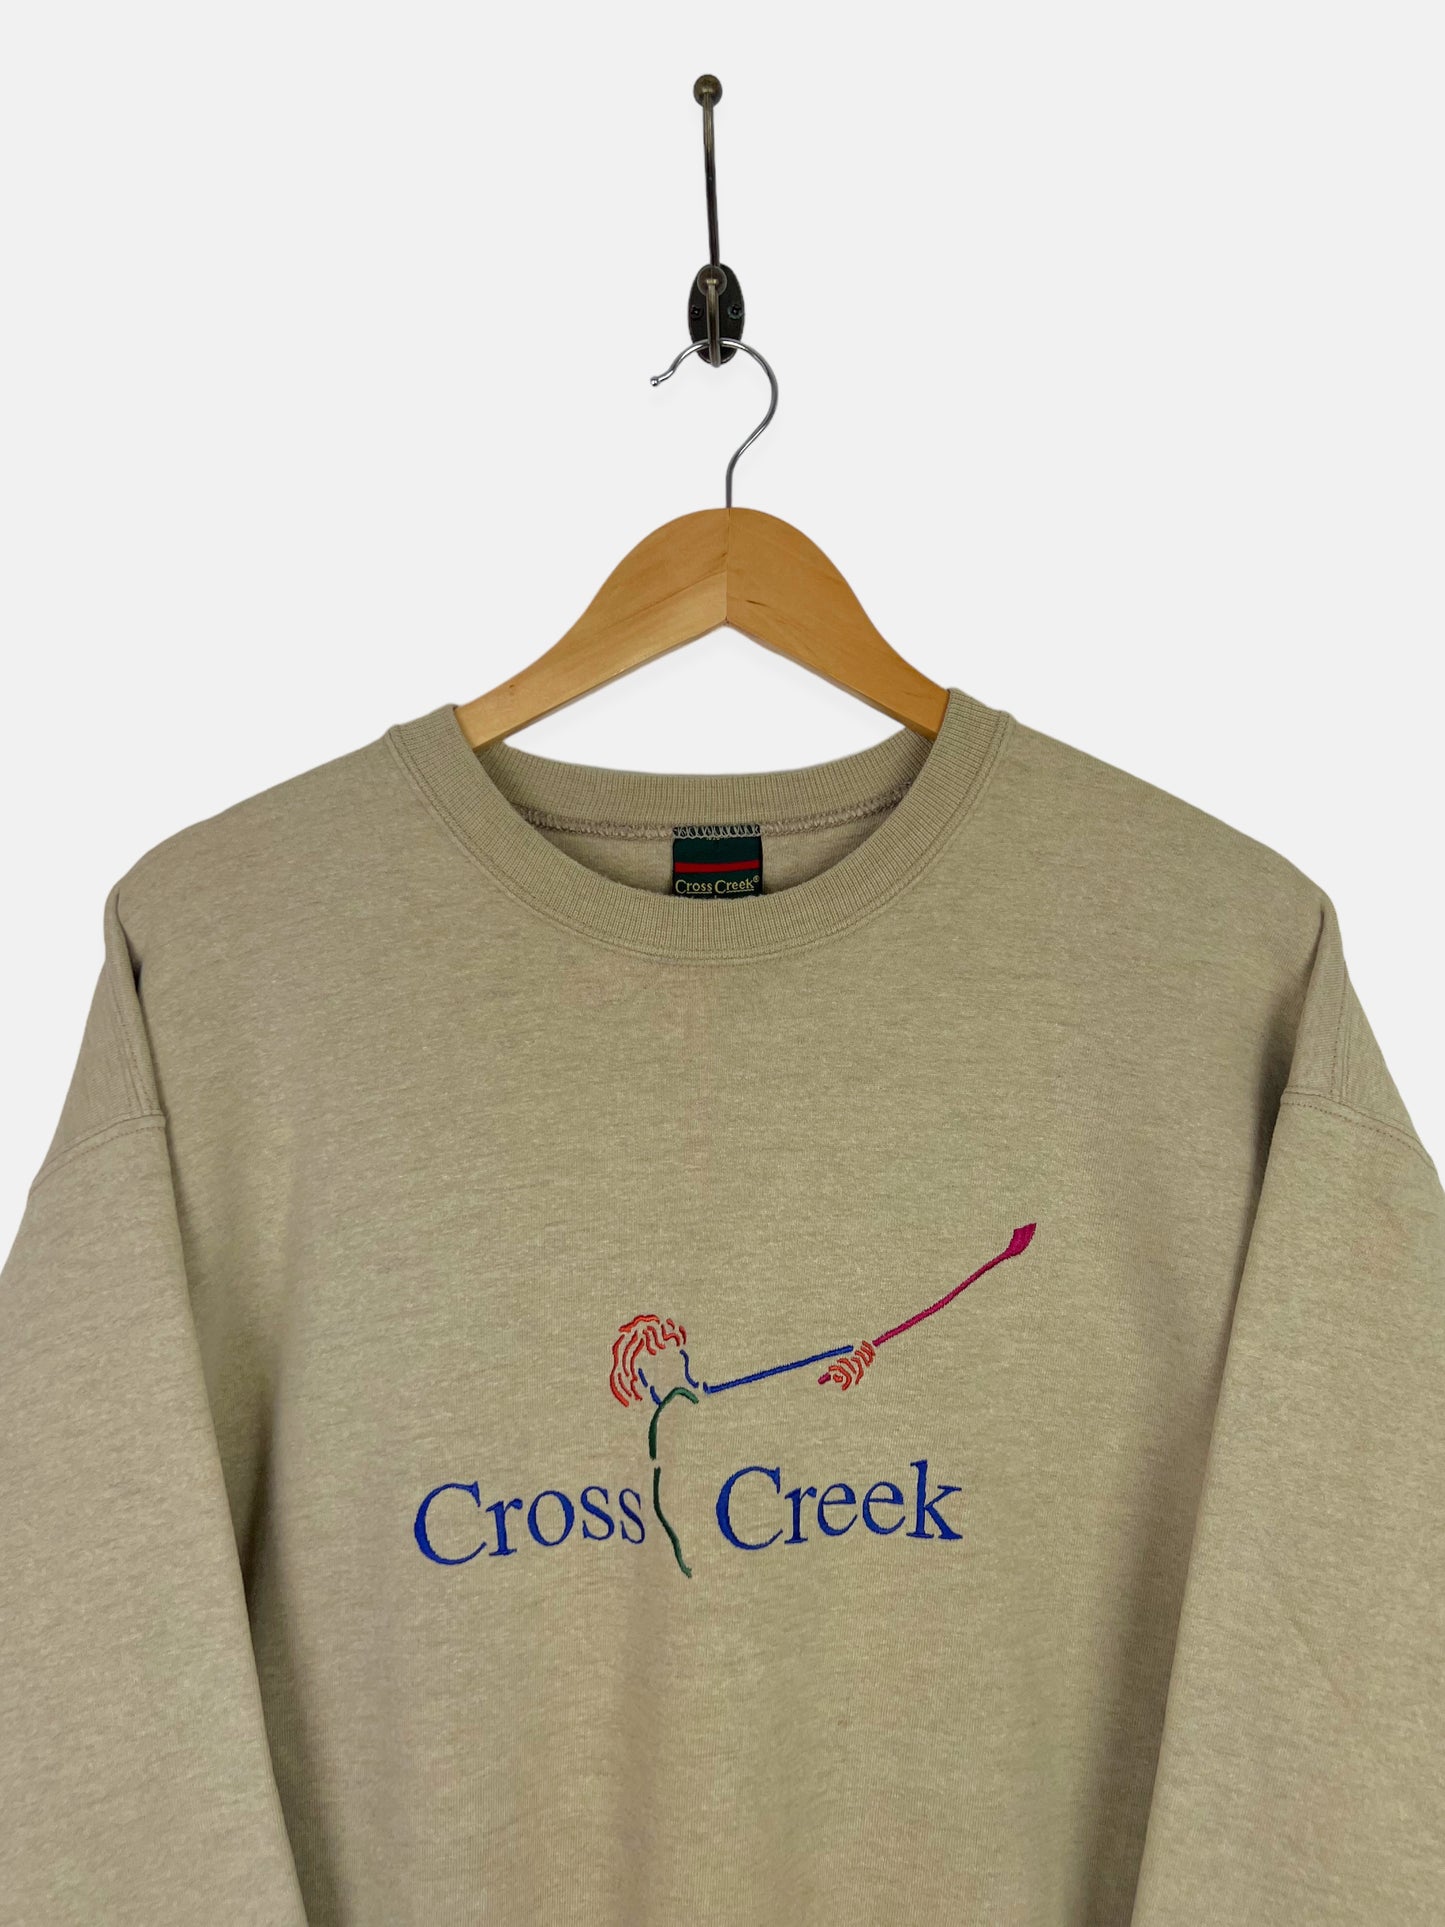 90's Cross Creek Golf Club USA Made Embroidered Vintage Sweatshirt L